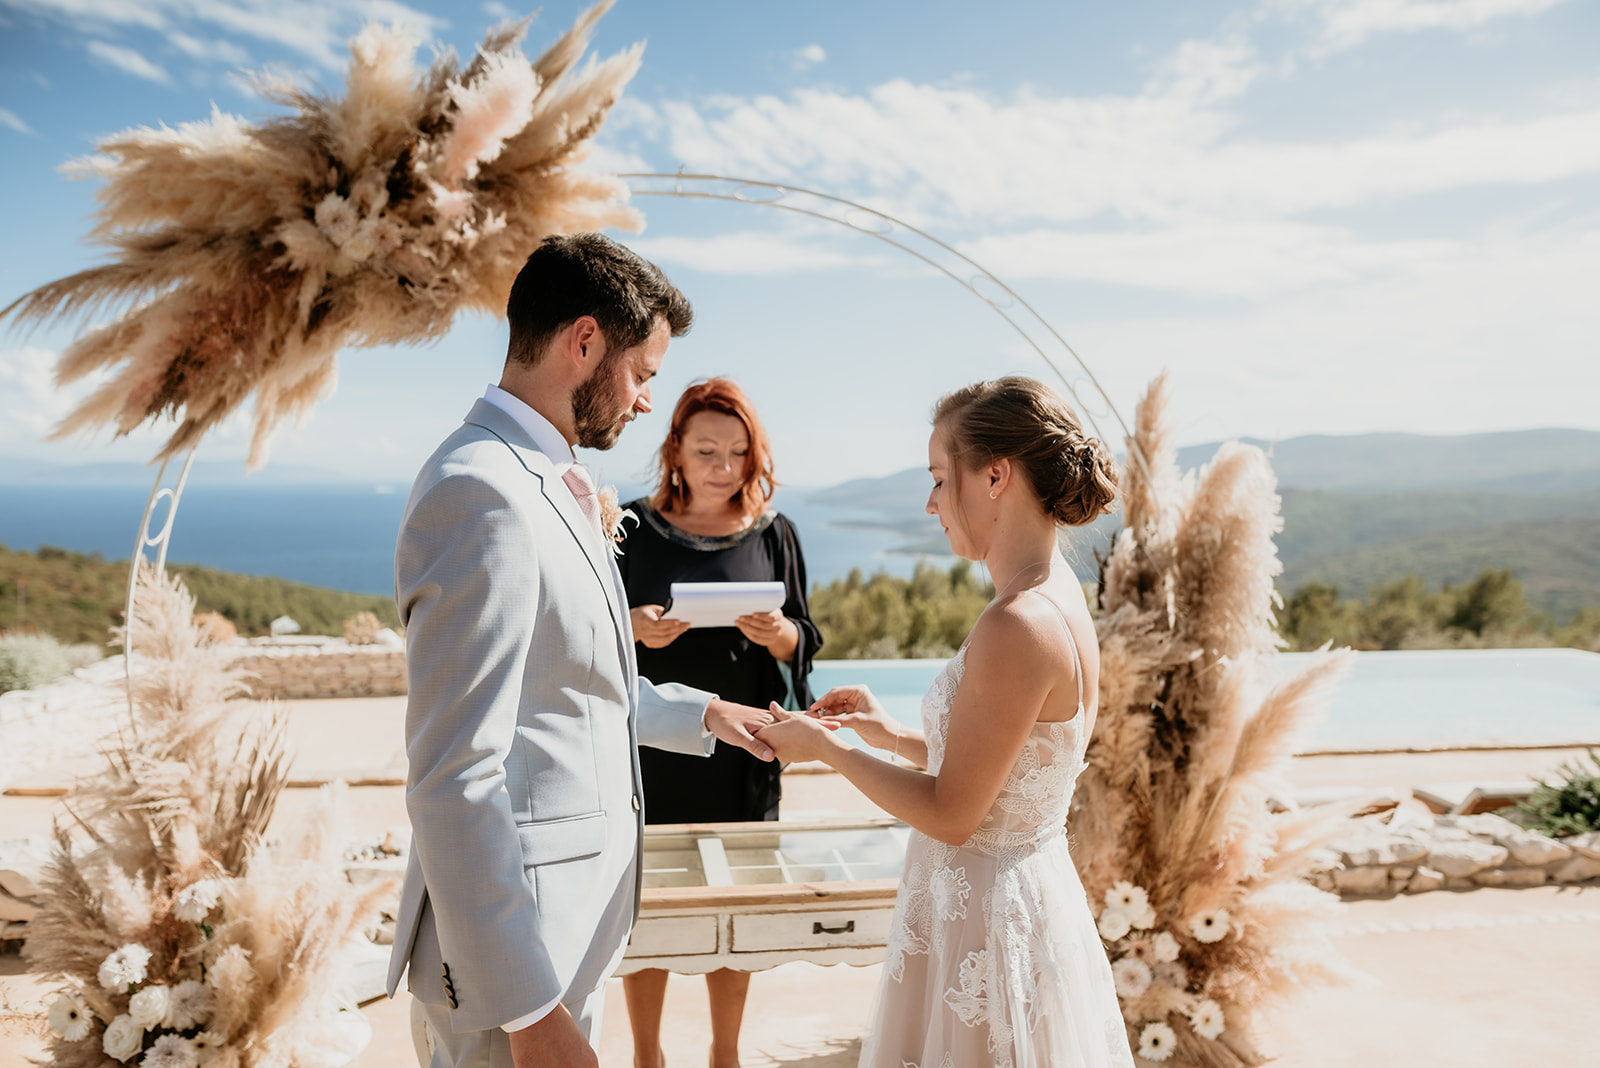 Istria wedding
Intimate destination wedding in Istria
Istria wedding photographer
Villa Rosa dei Venti